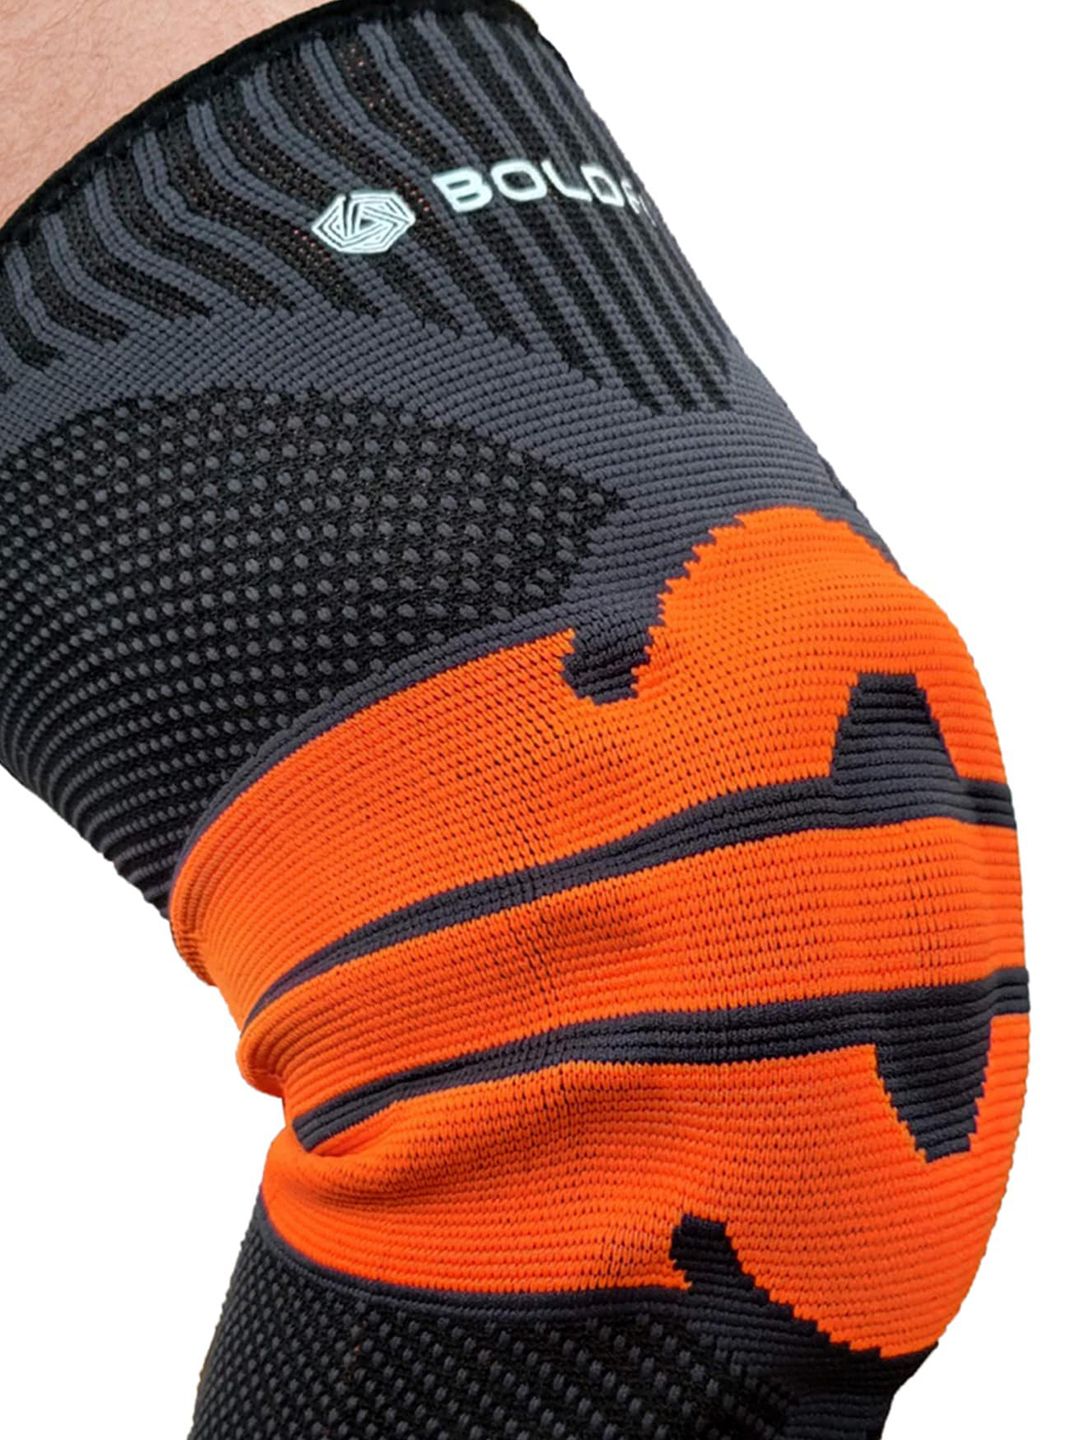 BOLDFIT Grey & Orange Printed Knee Support Sleeves Price in India